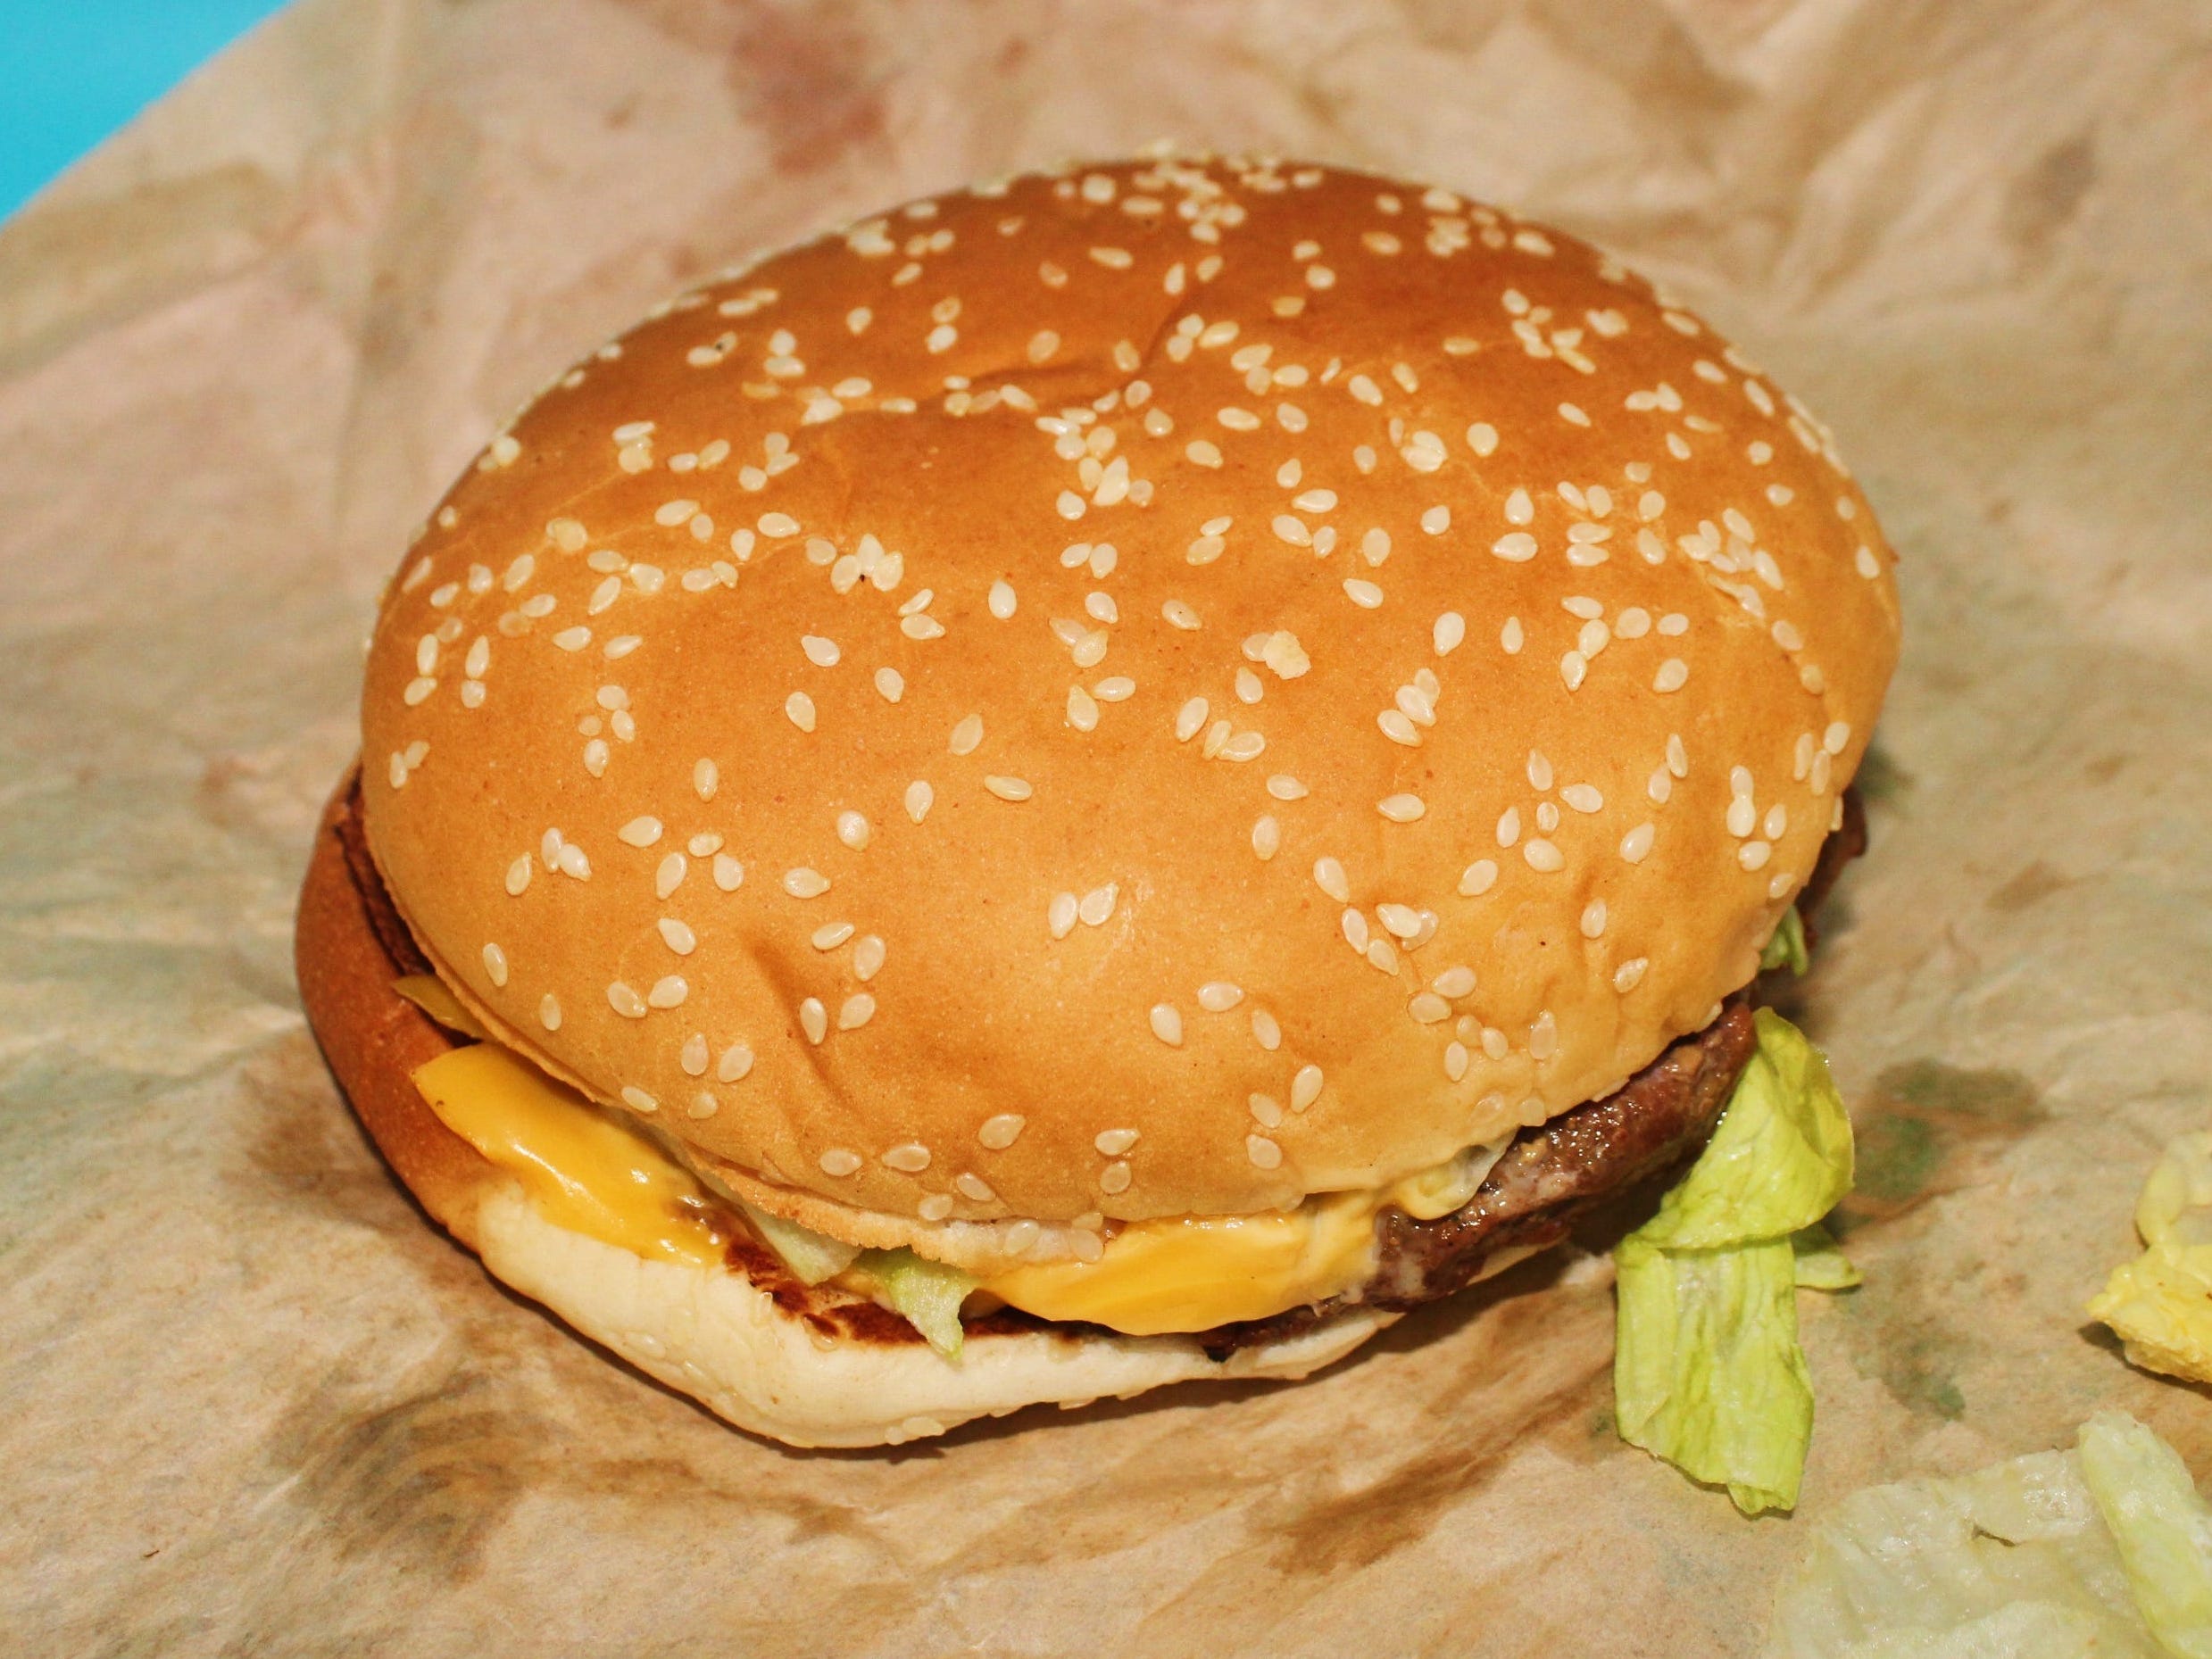 Burger King Whopper